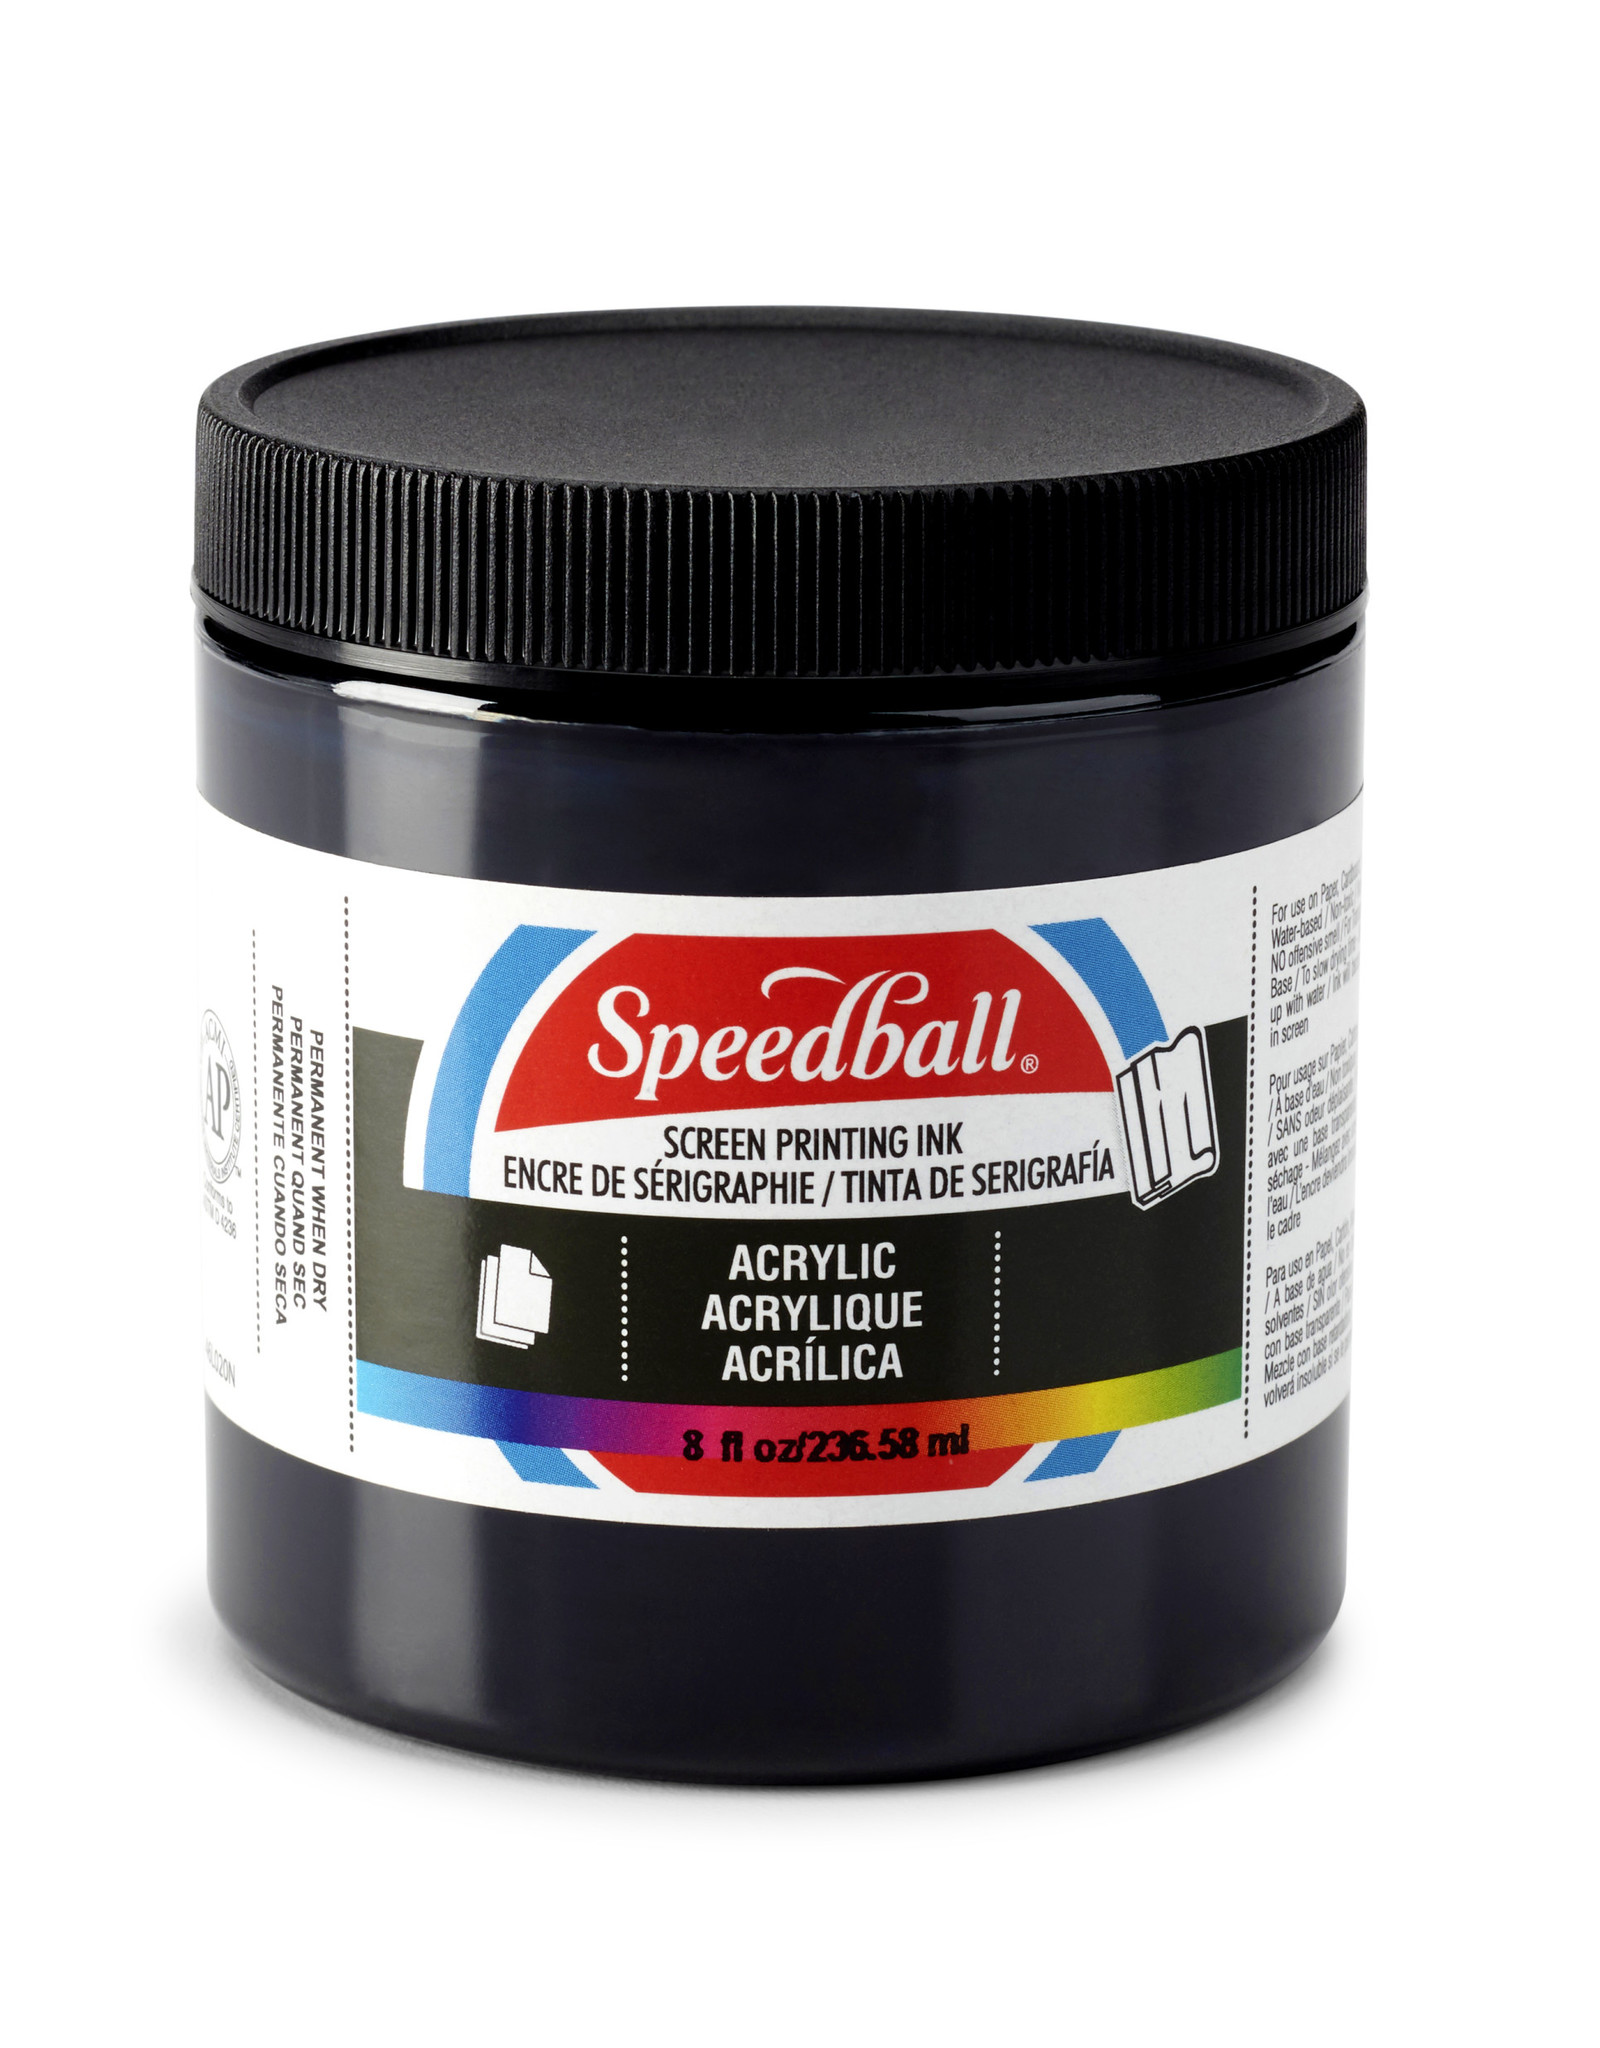 SPEEDBALL ART PRODUCTS Speedball Acrylic Screen Printing Ink, Black, 8oz